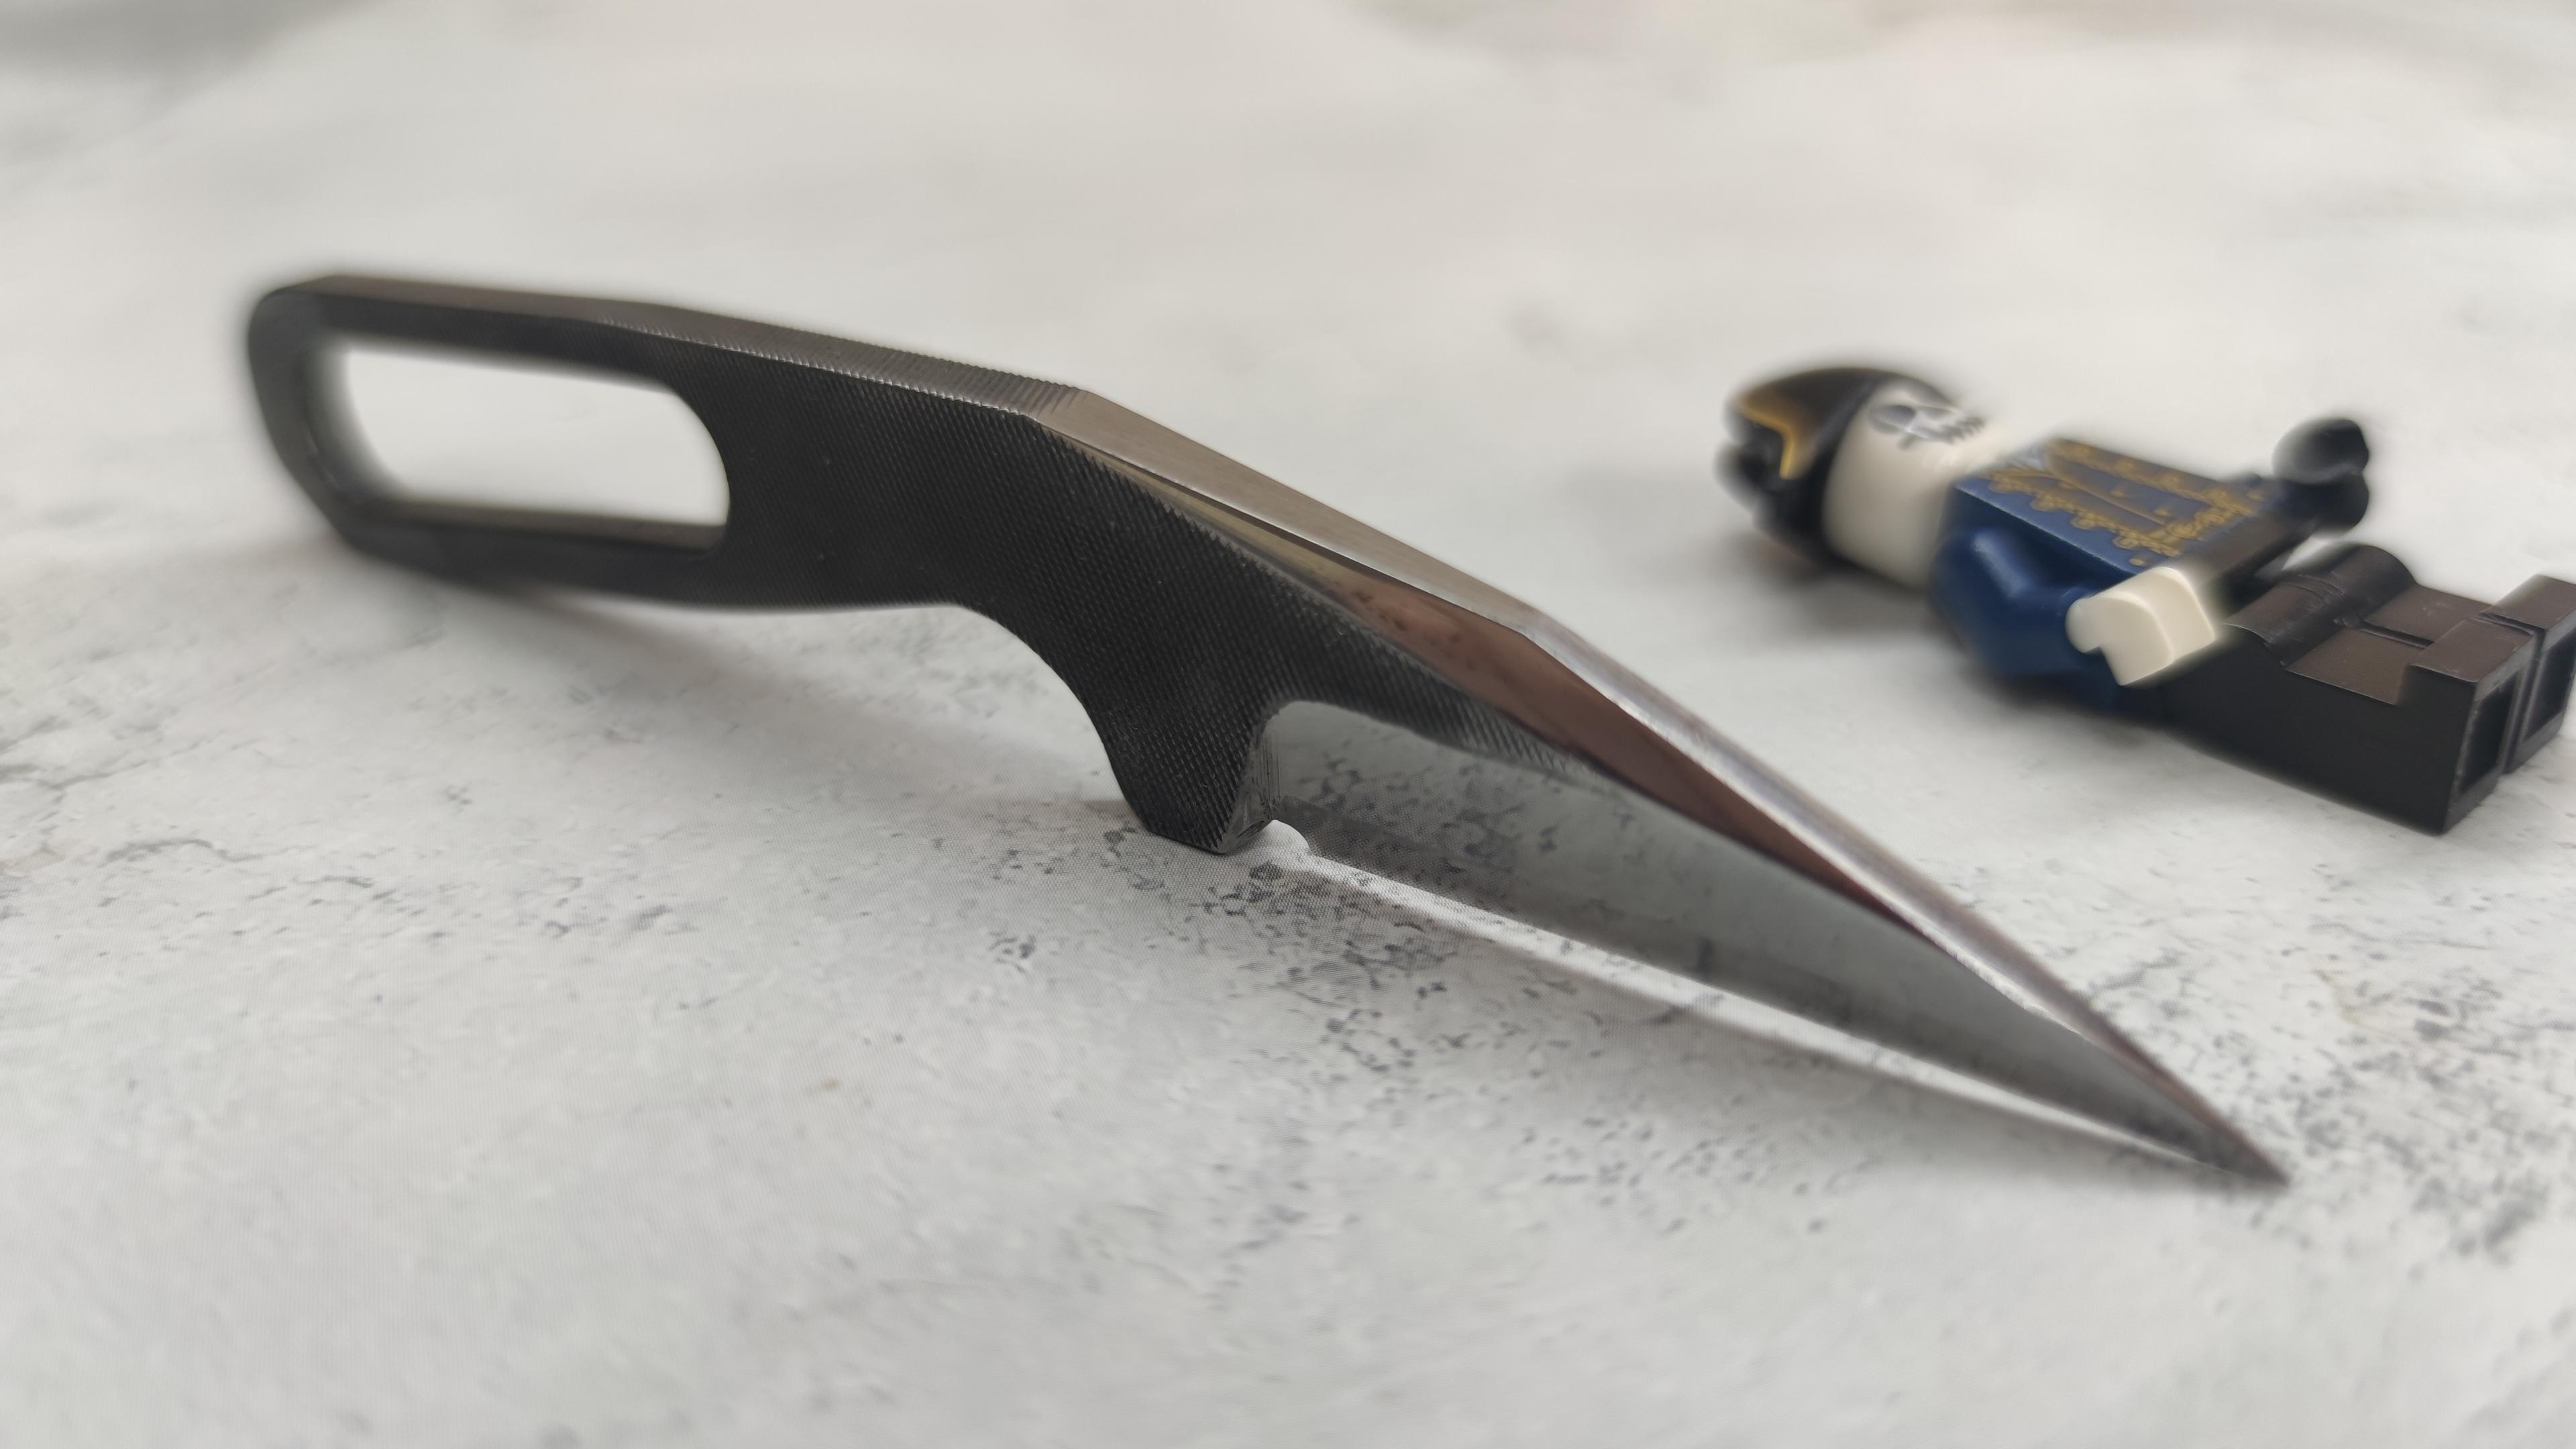 Skeleton mini knife from a metal file 3d model